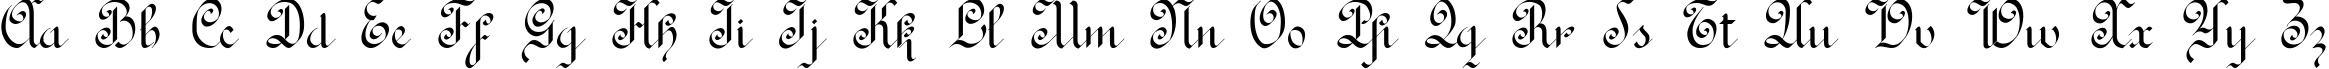 Пример написания английского алфавита шрифтом Rondo AncientTwo